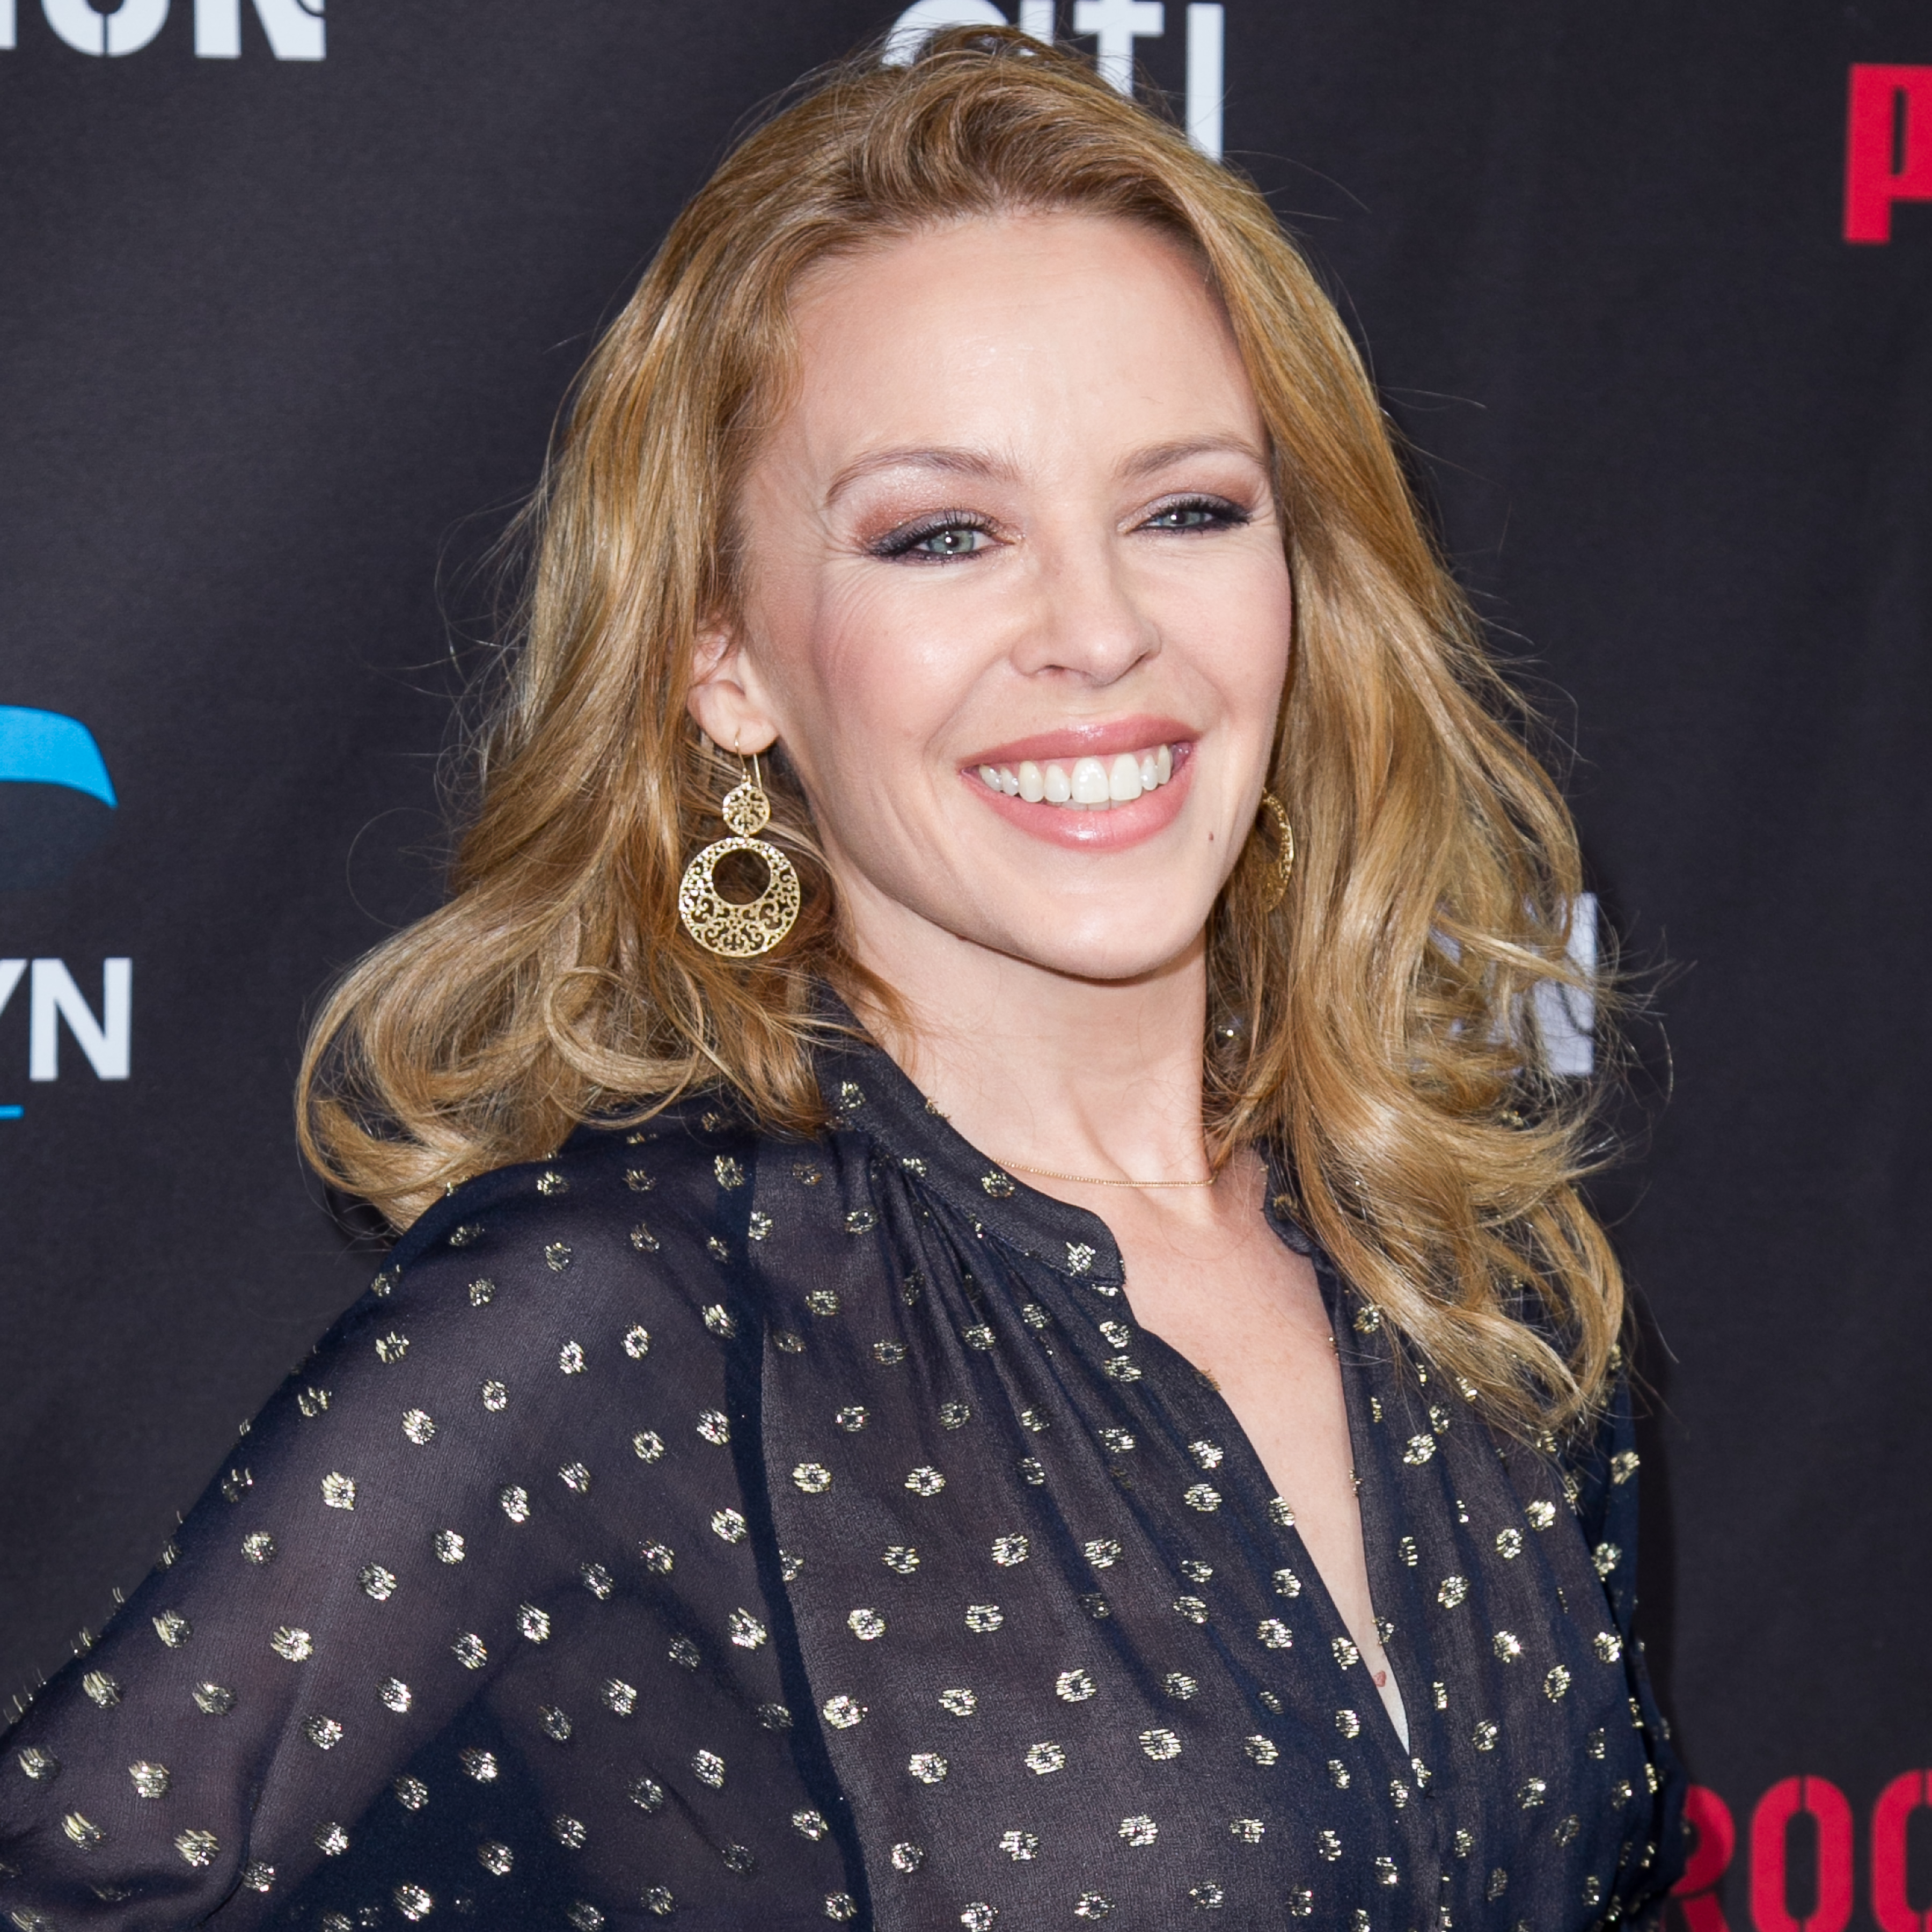 AusCelebs Forums - View topic - Kylie Minogue